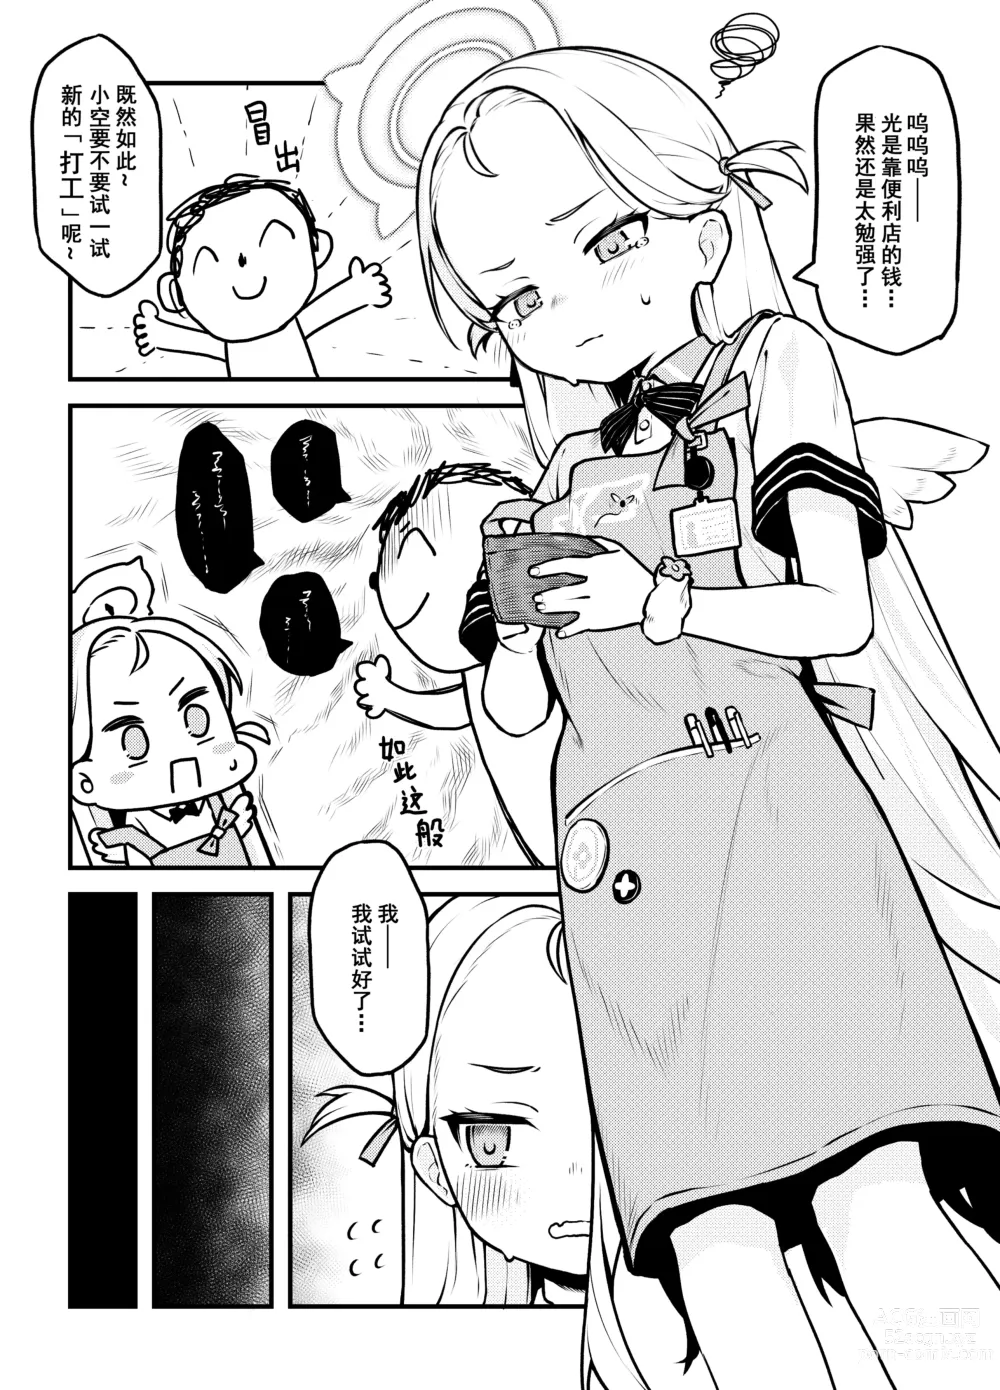 Page 1 of doujinshi Sora